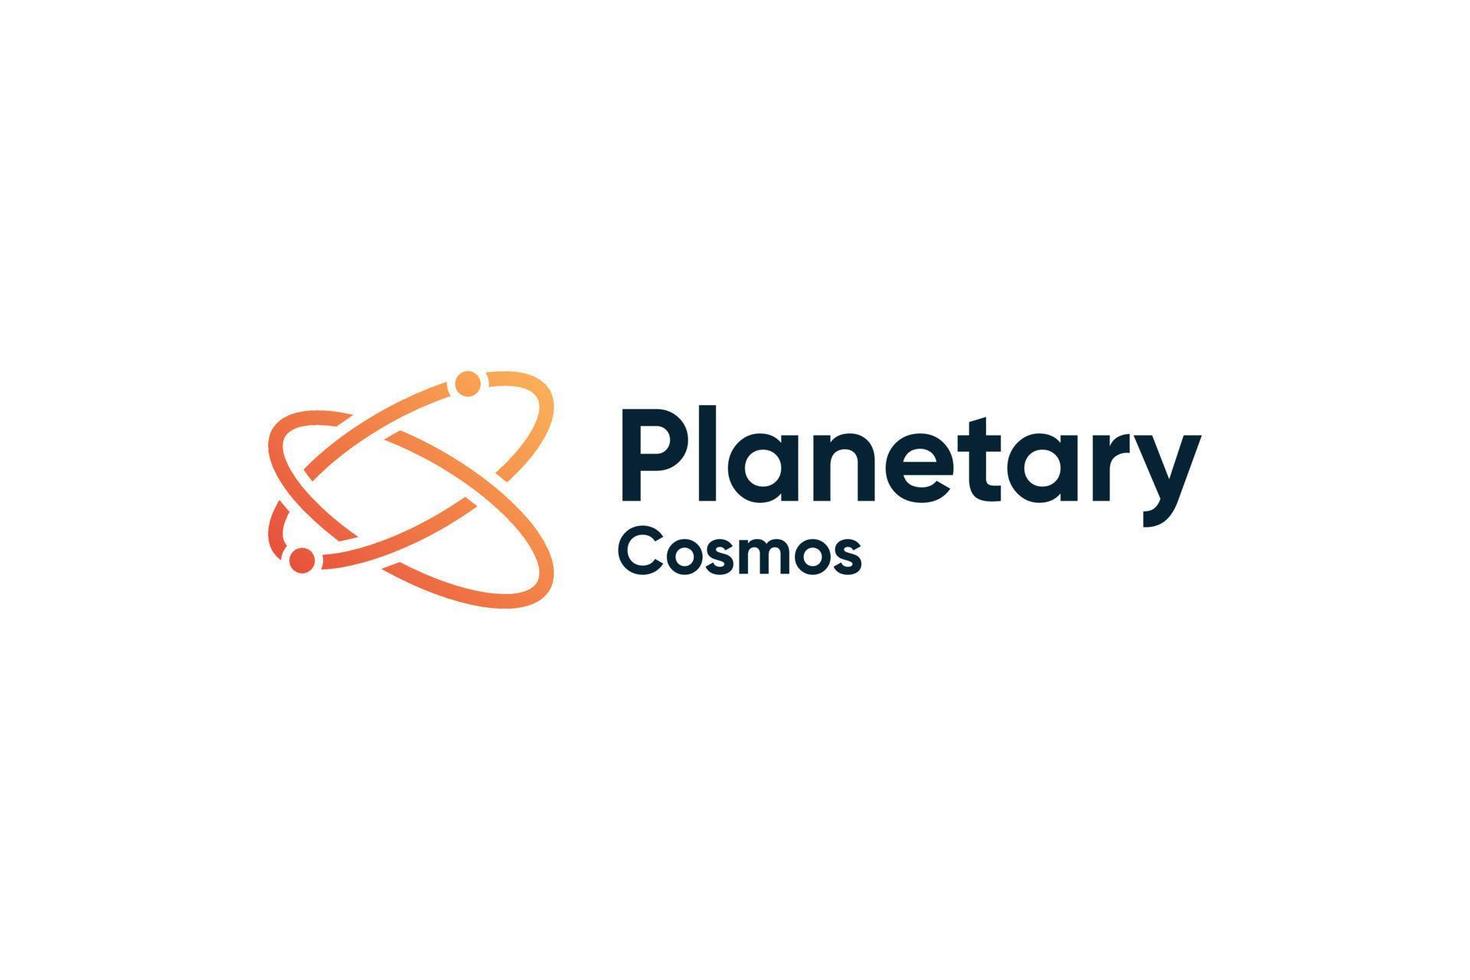 Planetary cosmos orbit astrology logo design vector